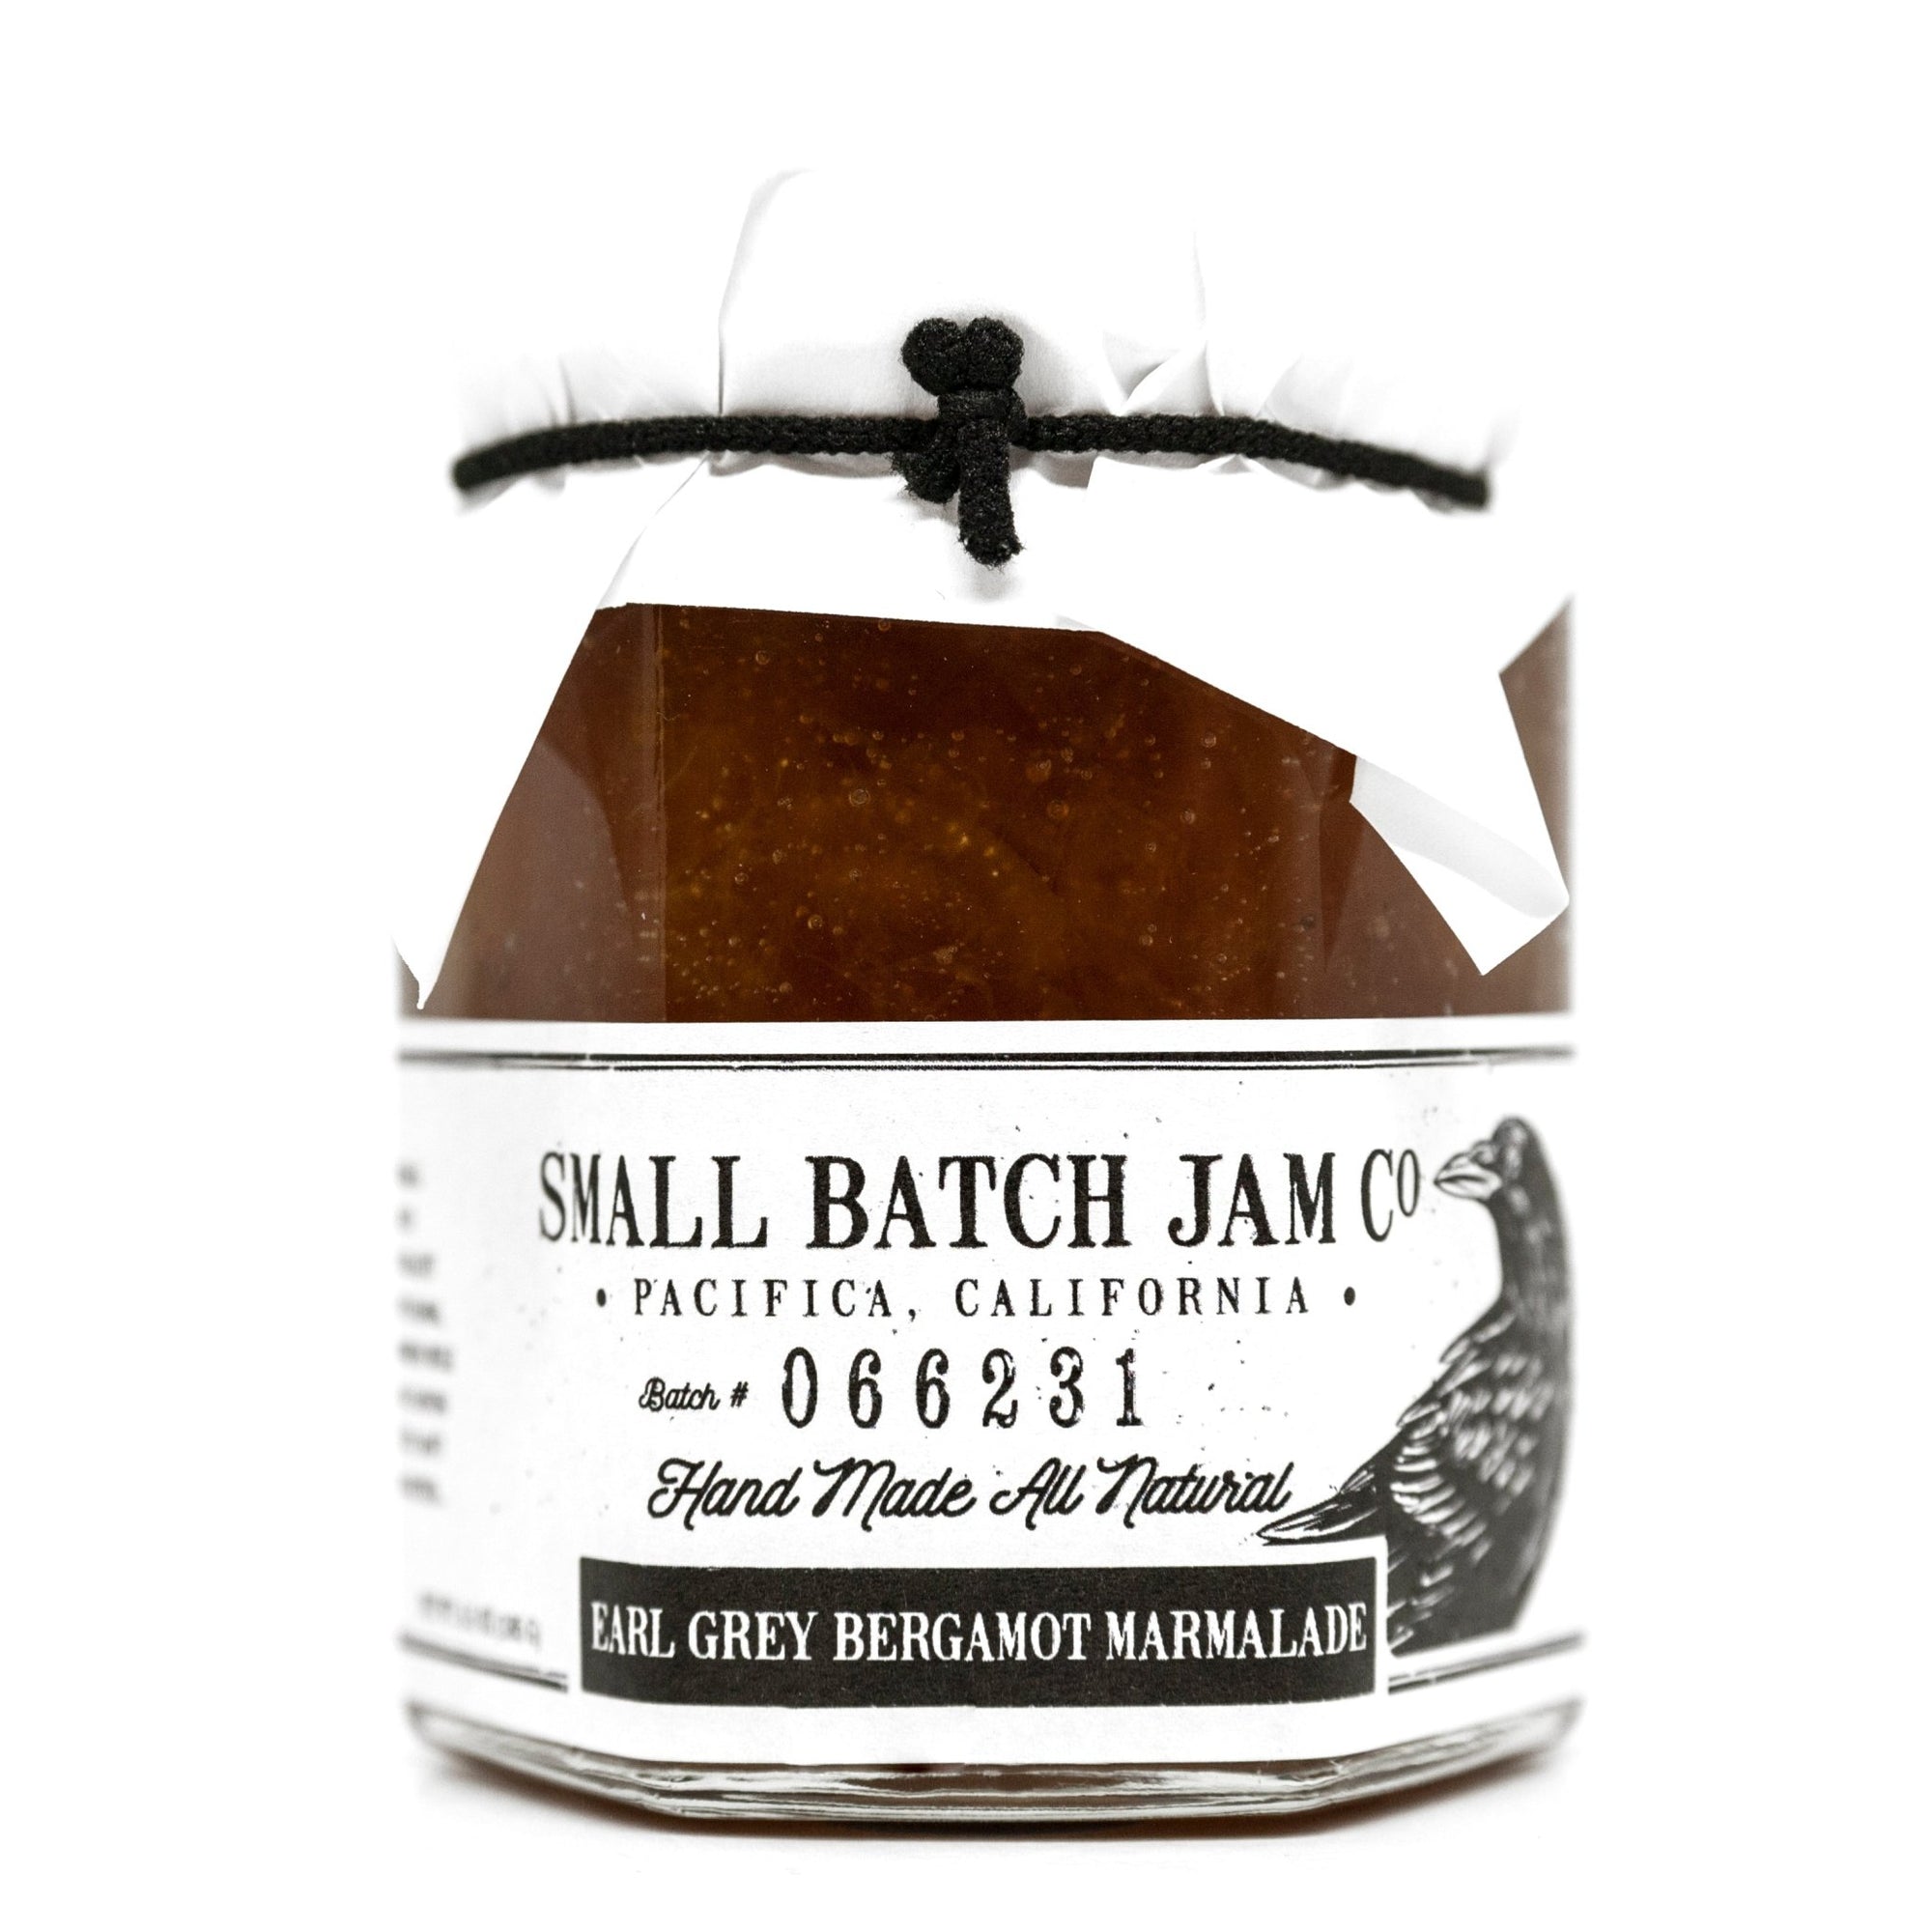 Earl Grey Bergamot Marmalade - Small Batch Jam Co